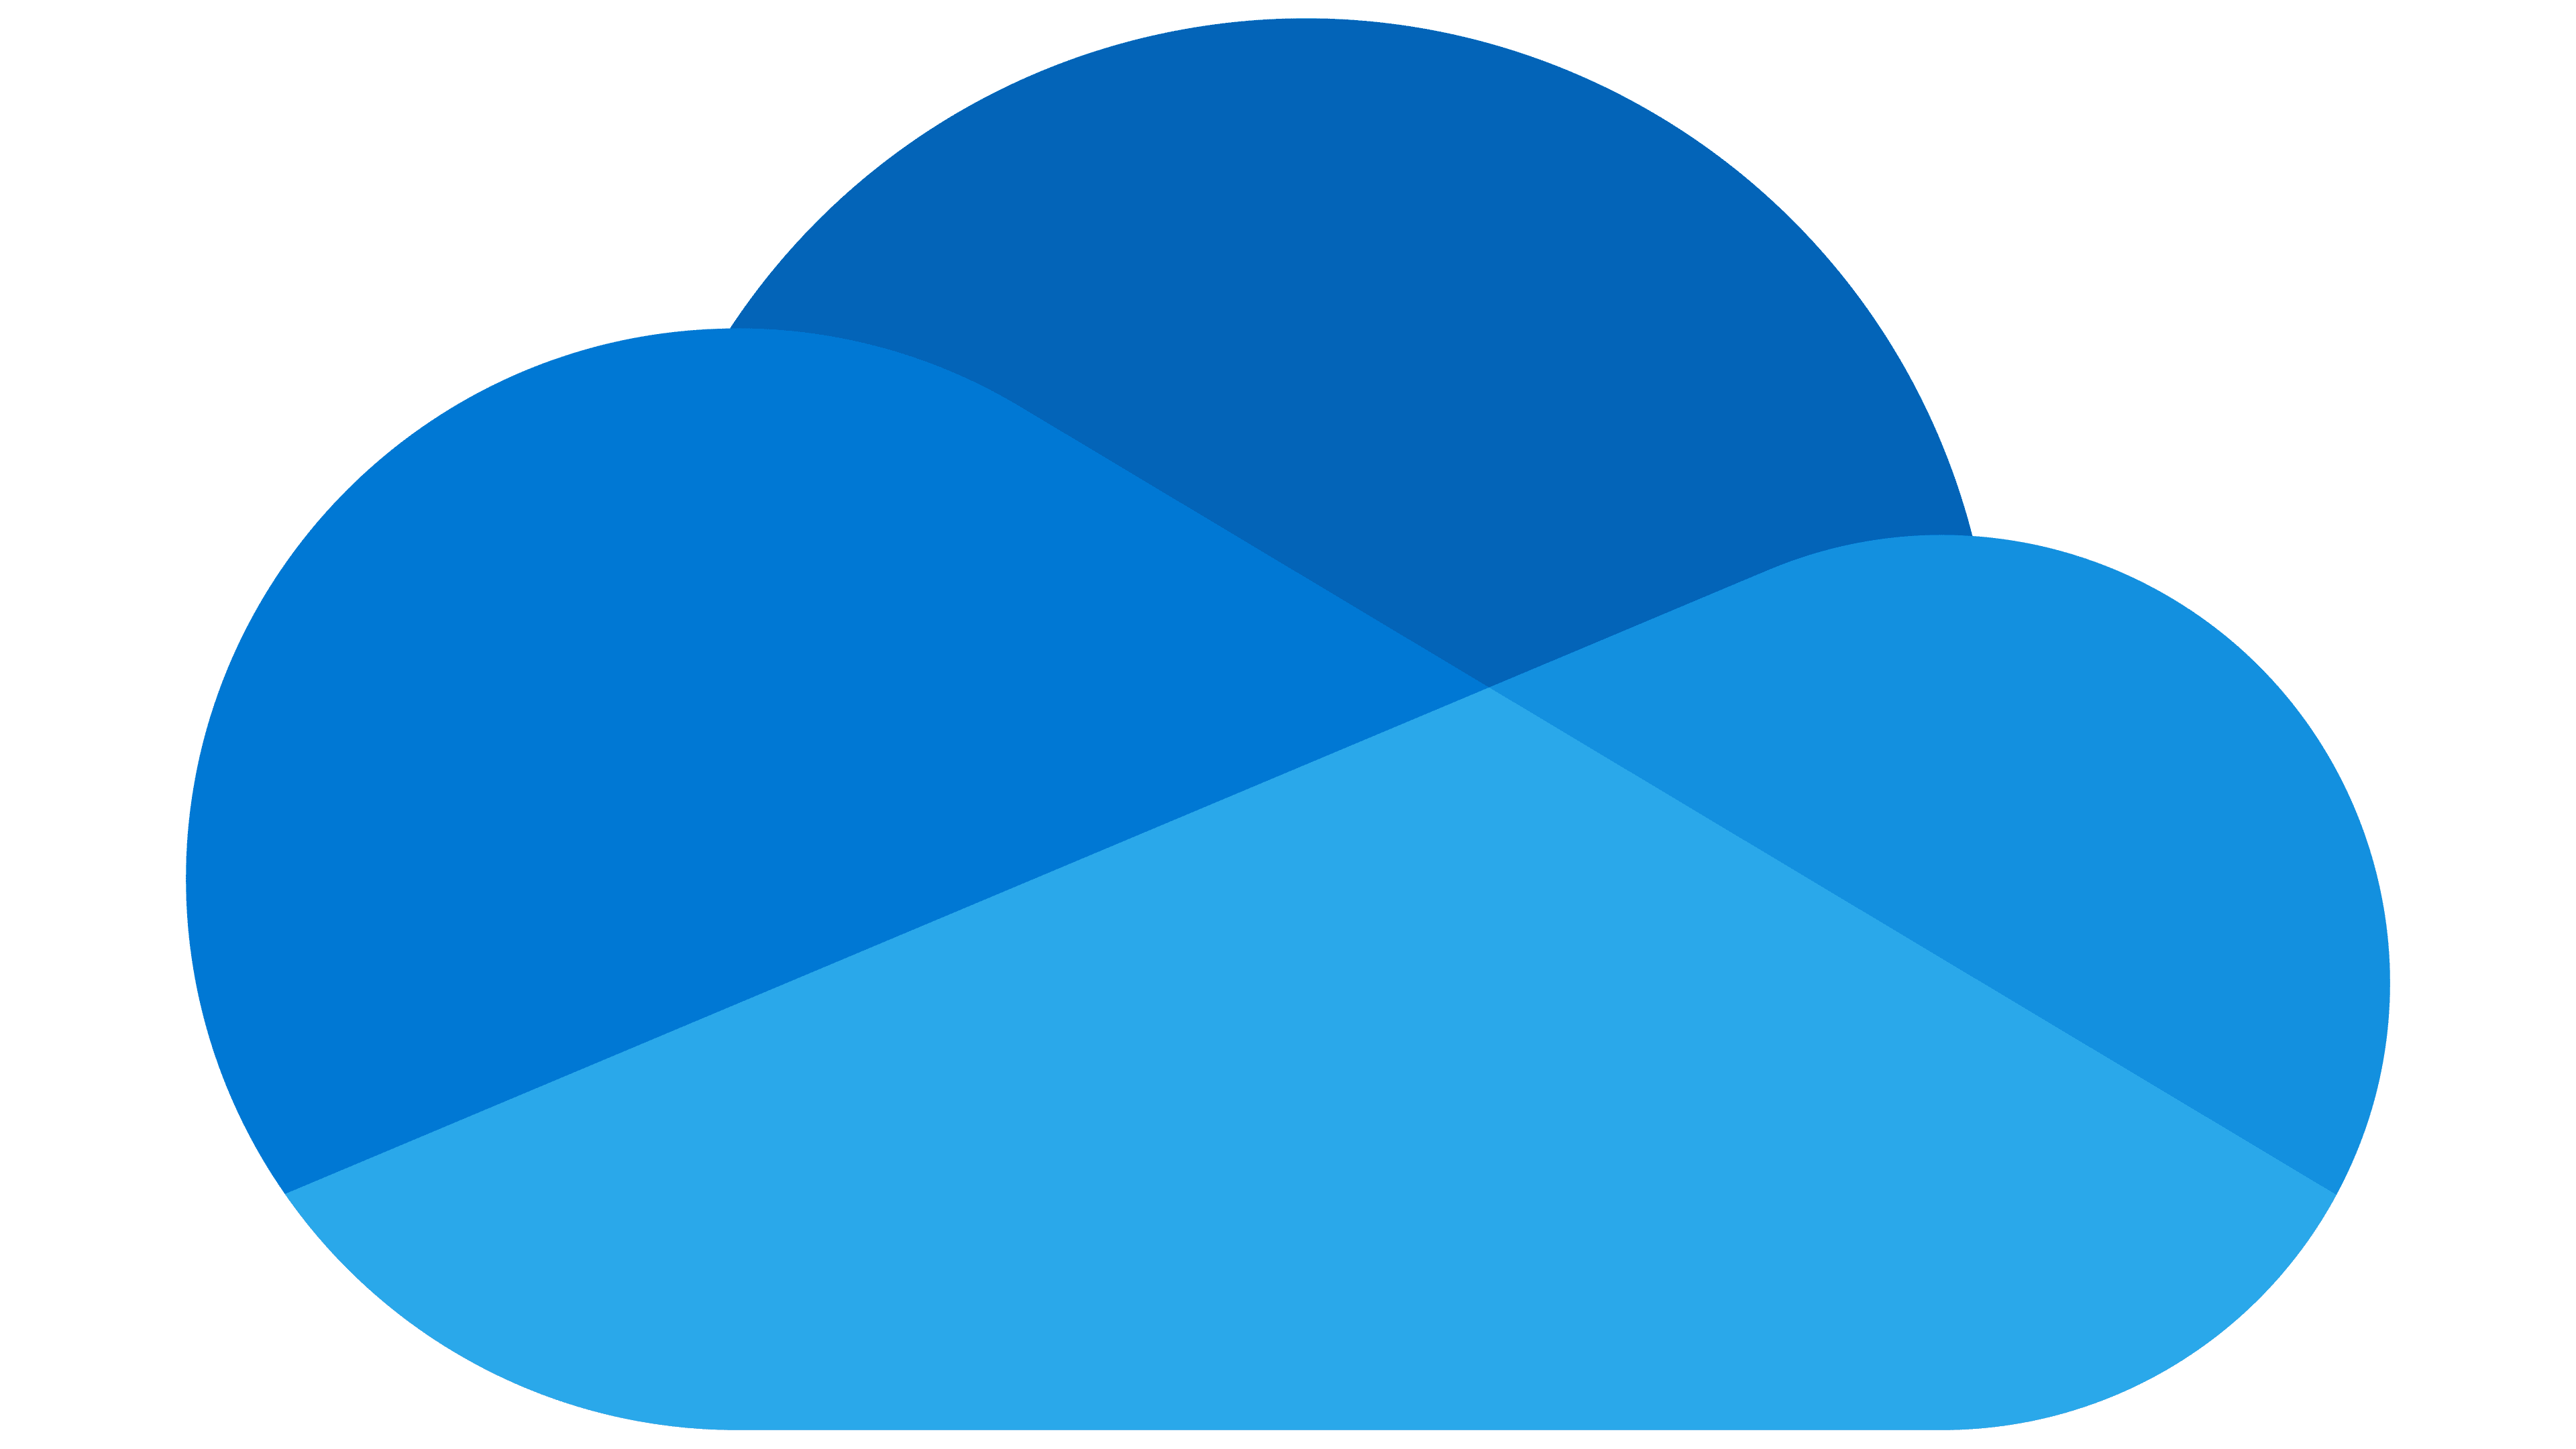 Microsoft OneDrive Logo